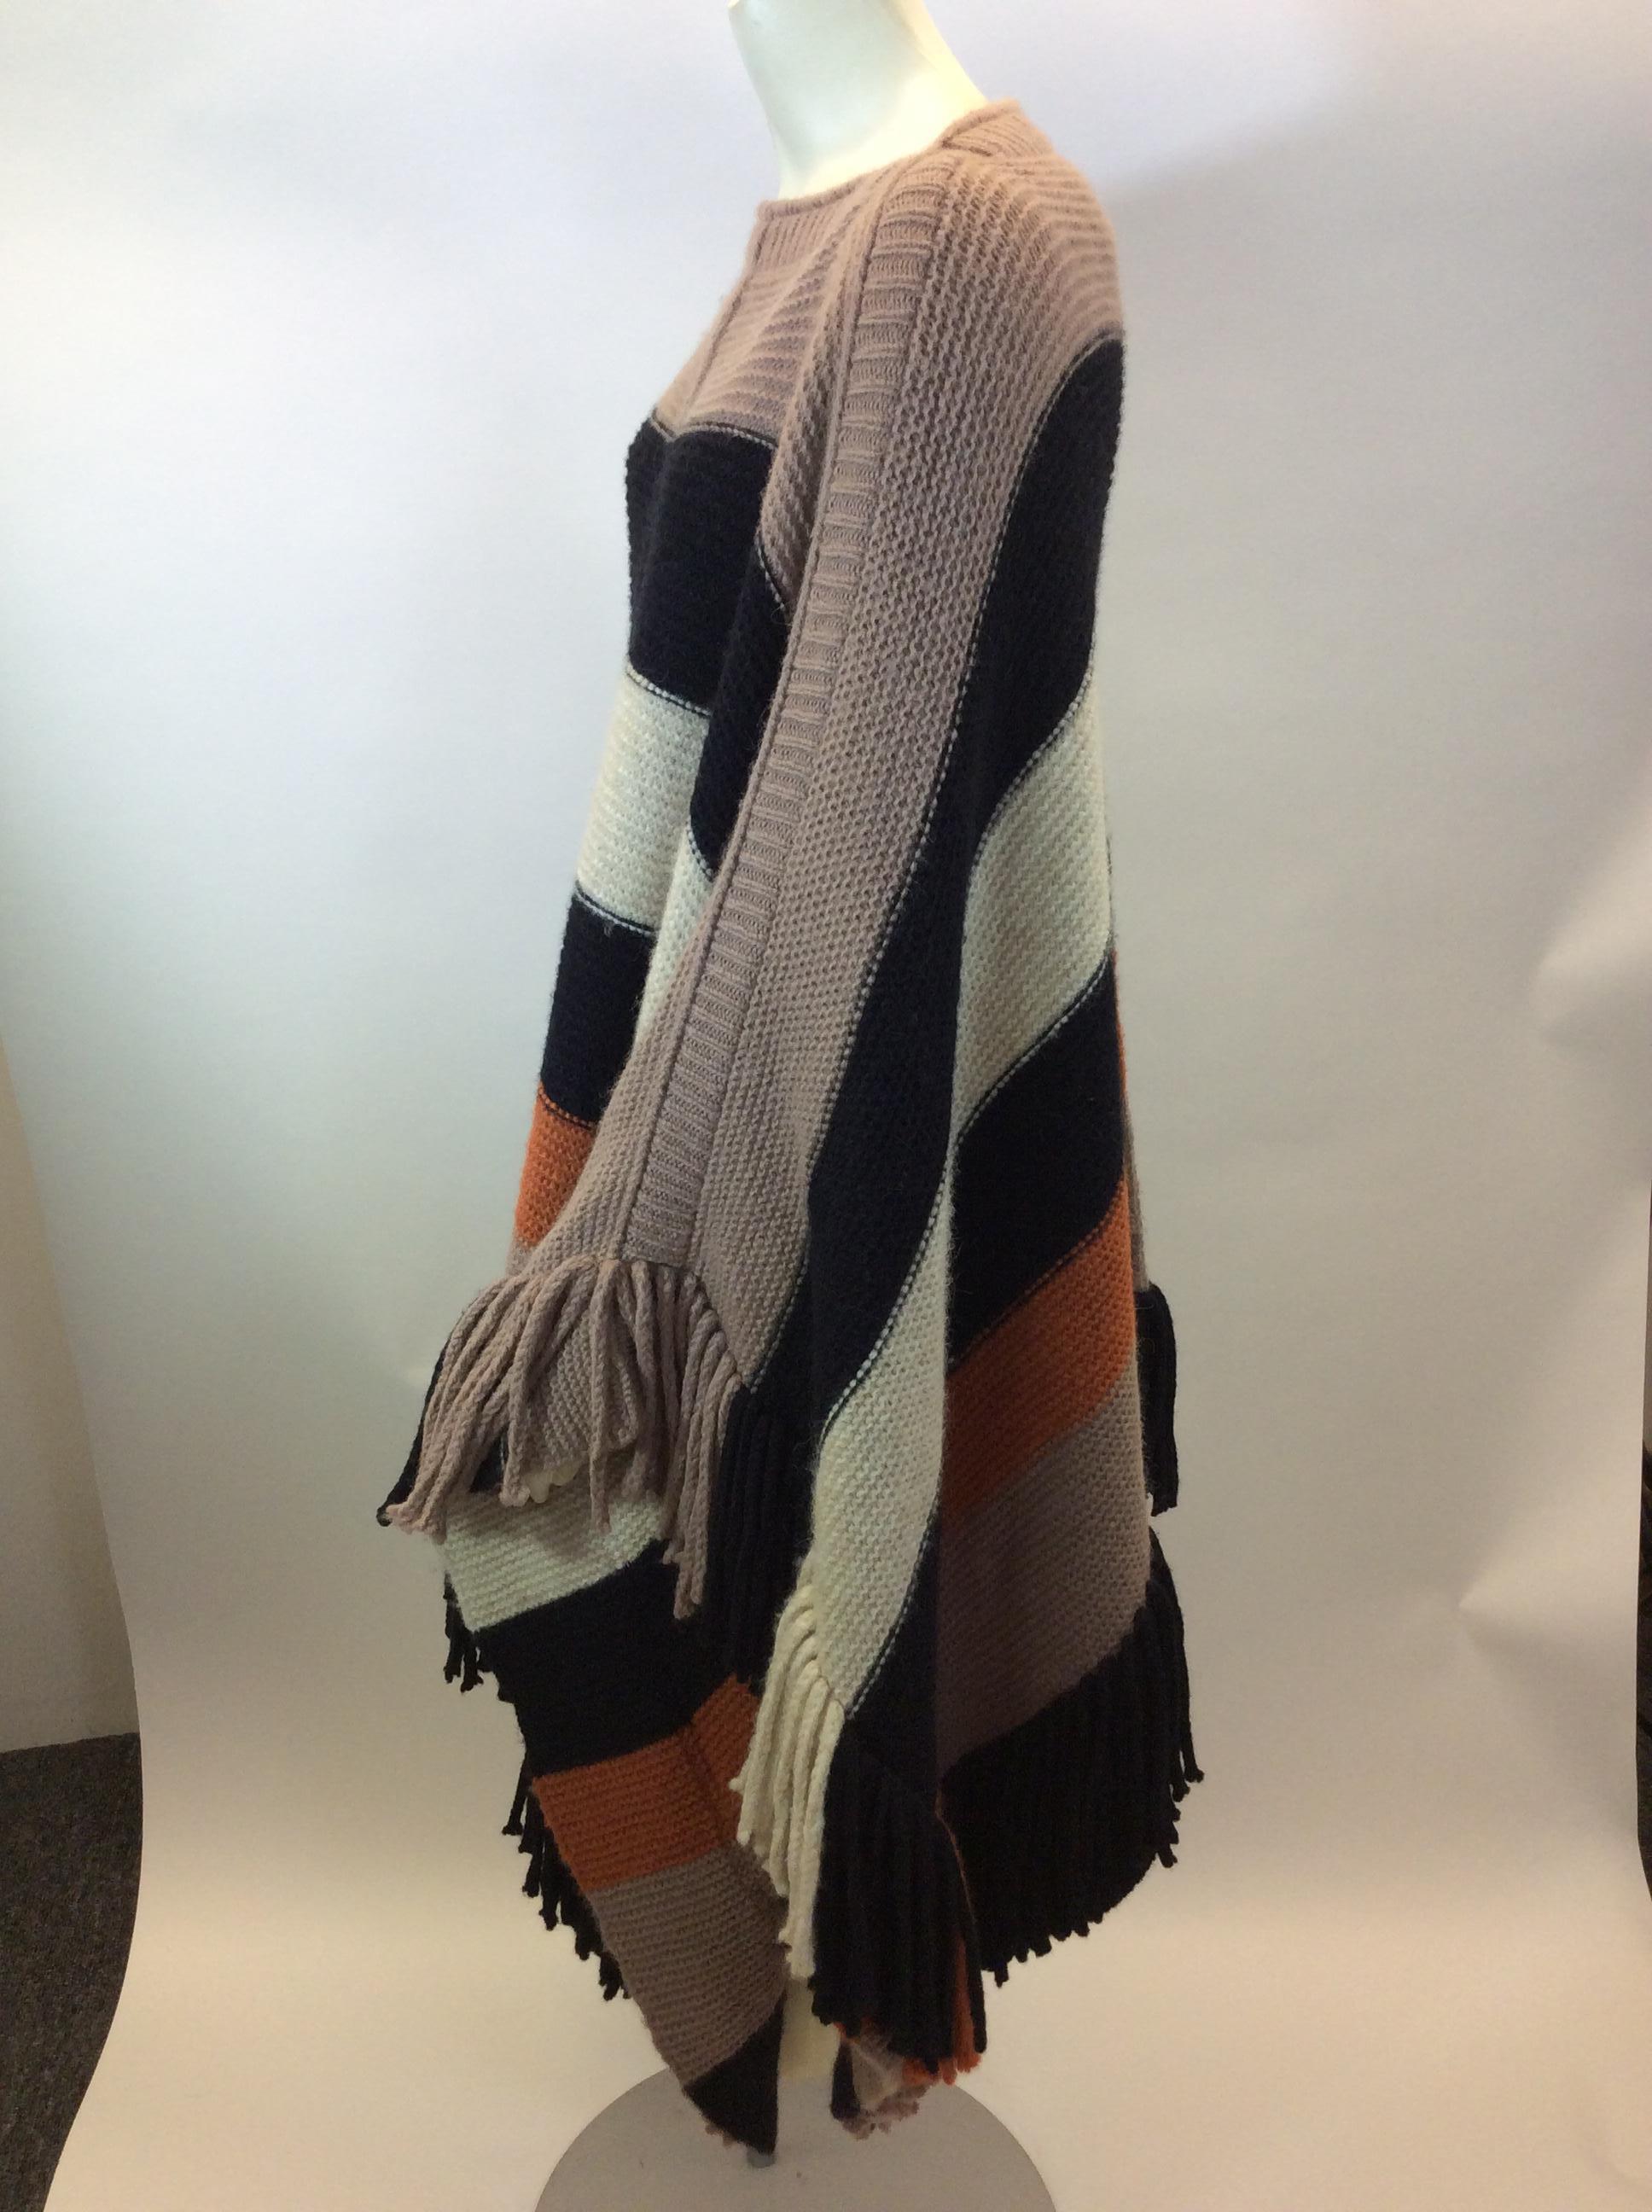 Sonia Rykiel Stripe Wool Cape
$299
Made in Italy
68* Alpaca, 10% Virgin Wool, 22% Polyamide
30” length